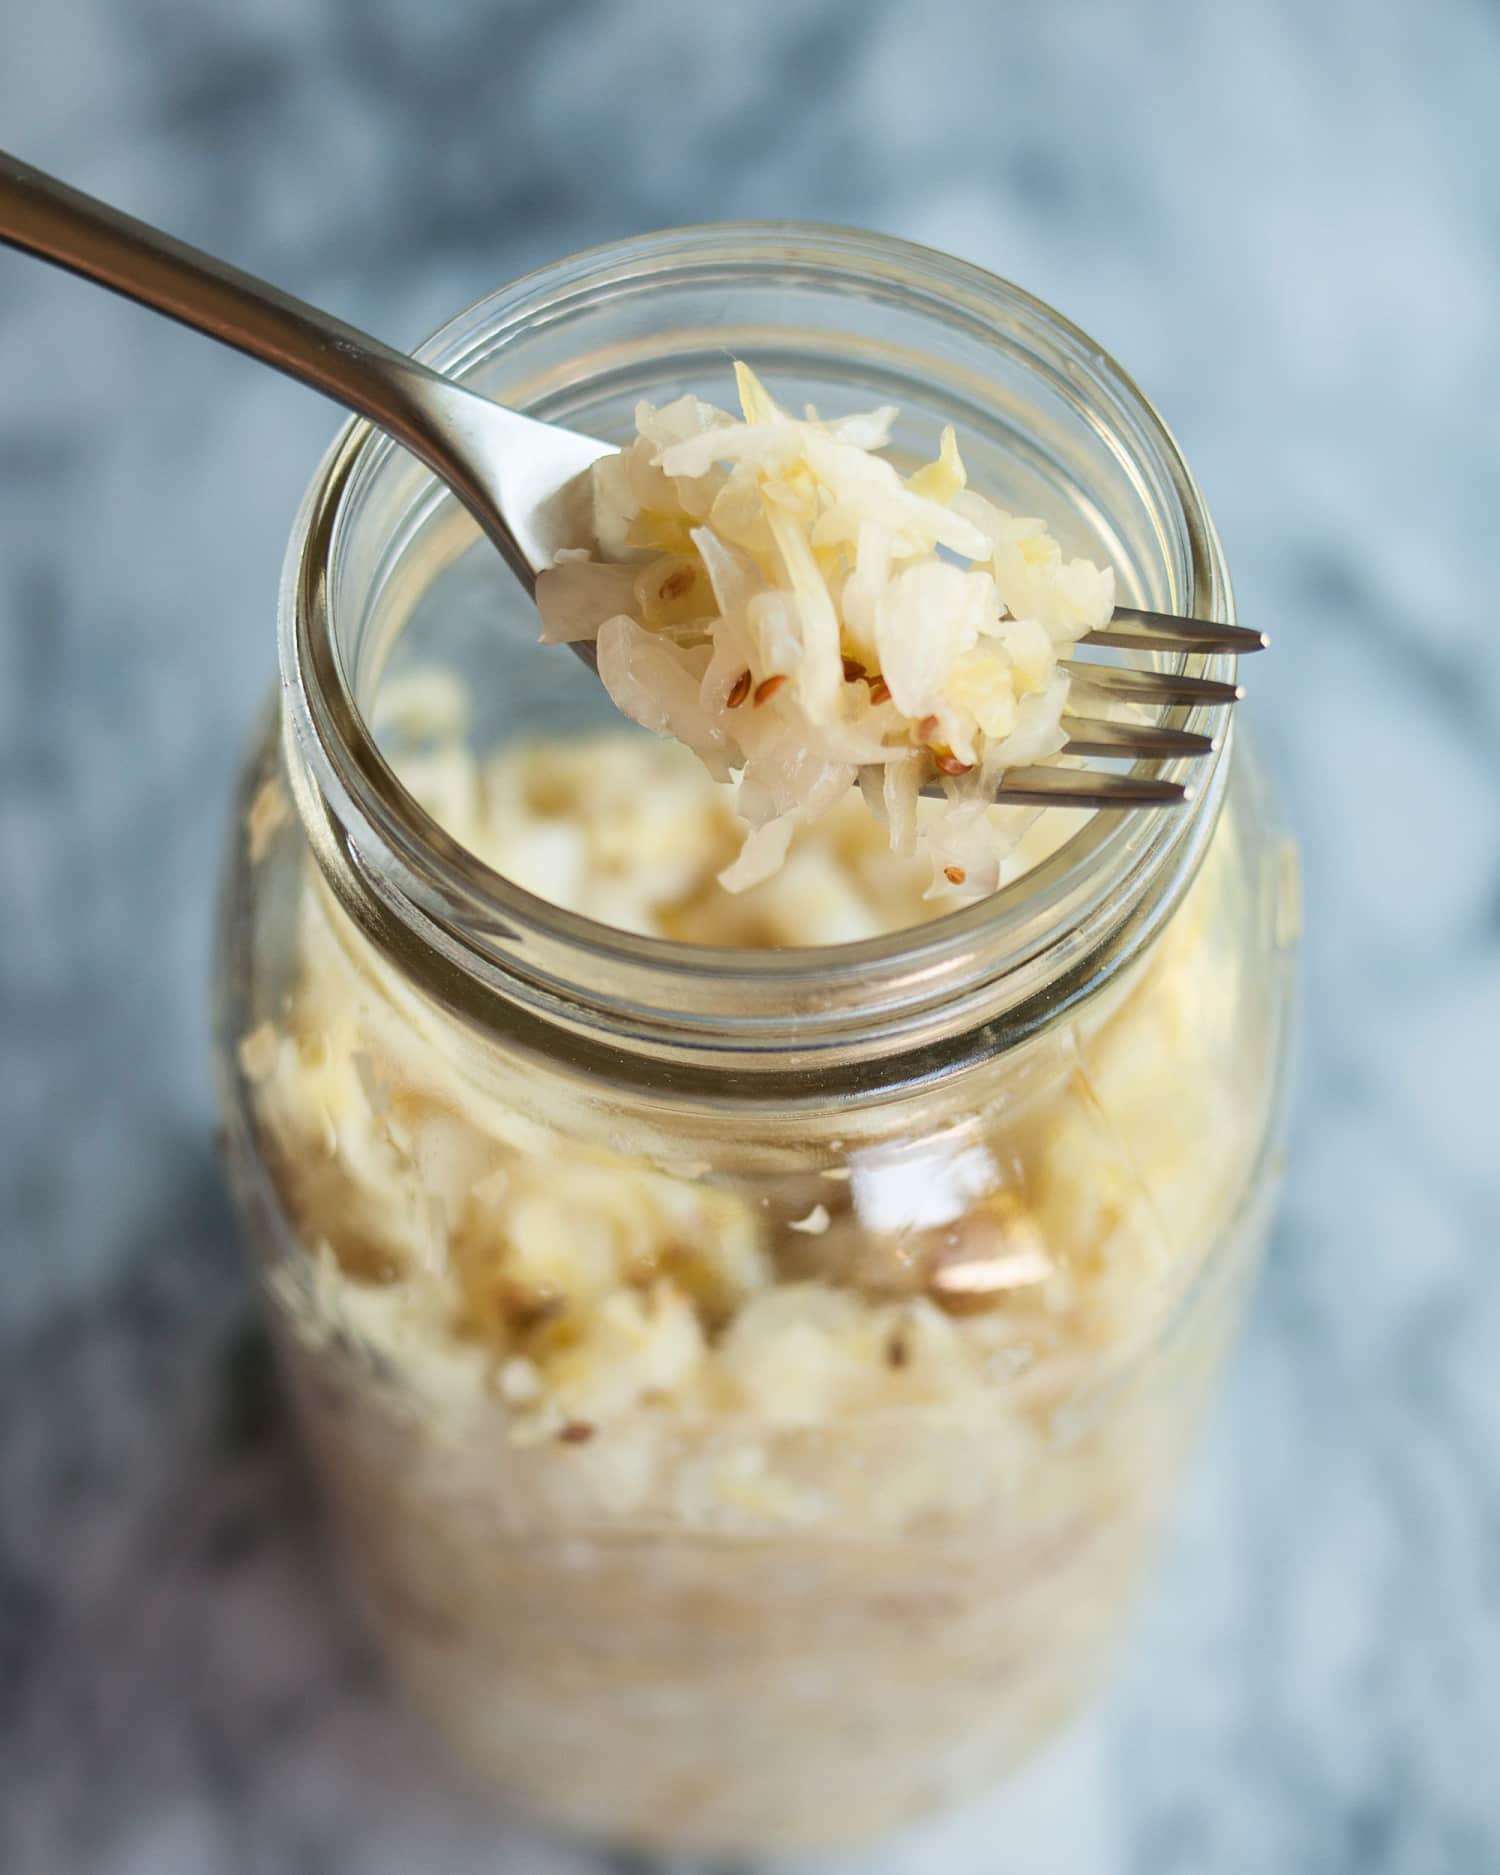 How To Make Homemade Sauerkraut in a Mason Jar | Kitchn